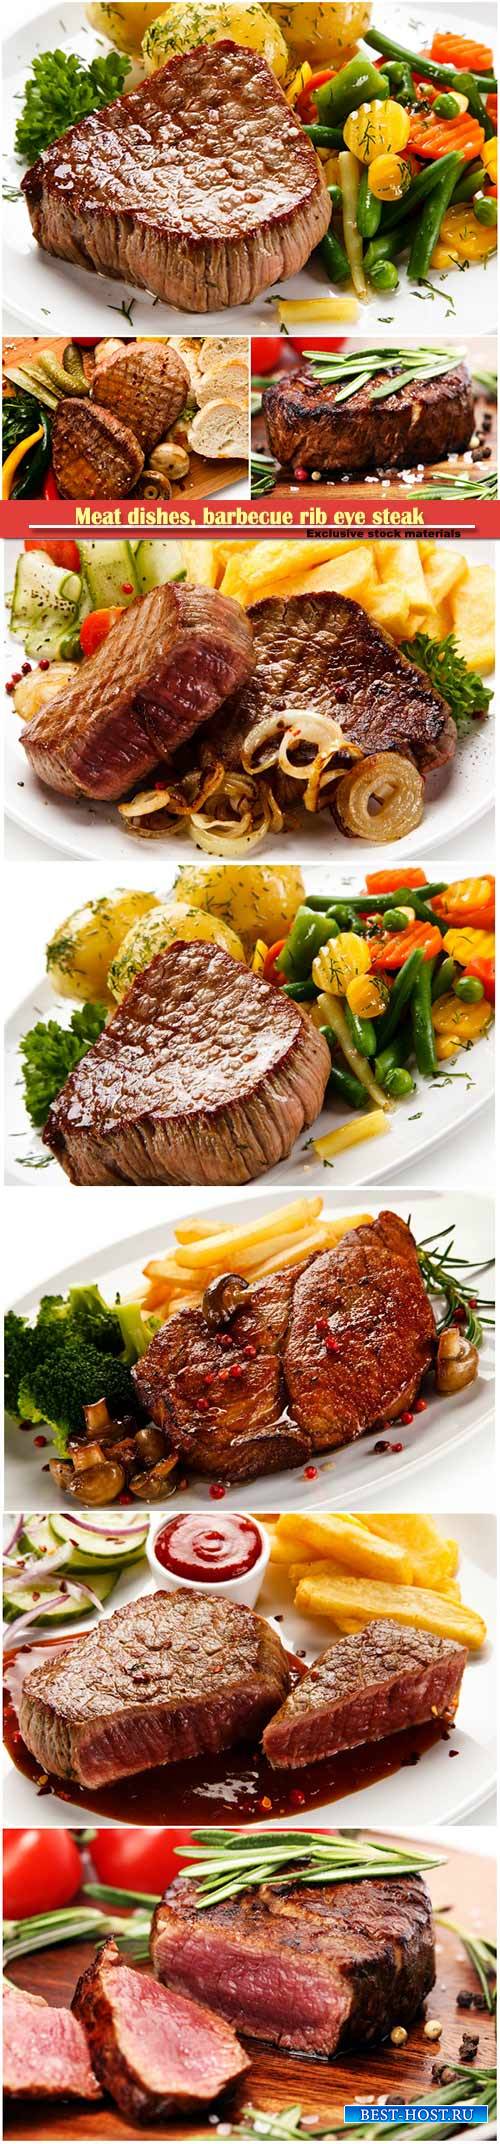 Meat dishes, barbecue rib eye steak, tenderloin filet mignon